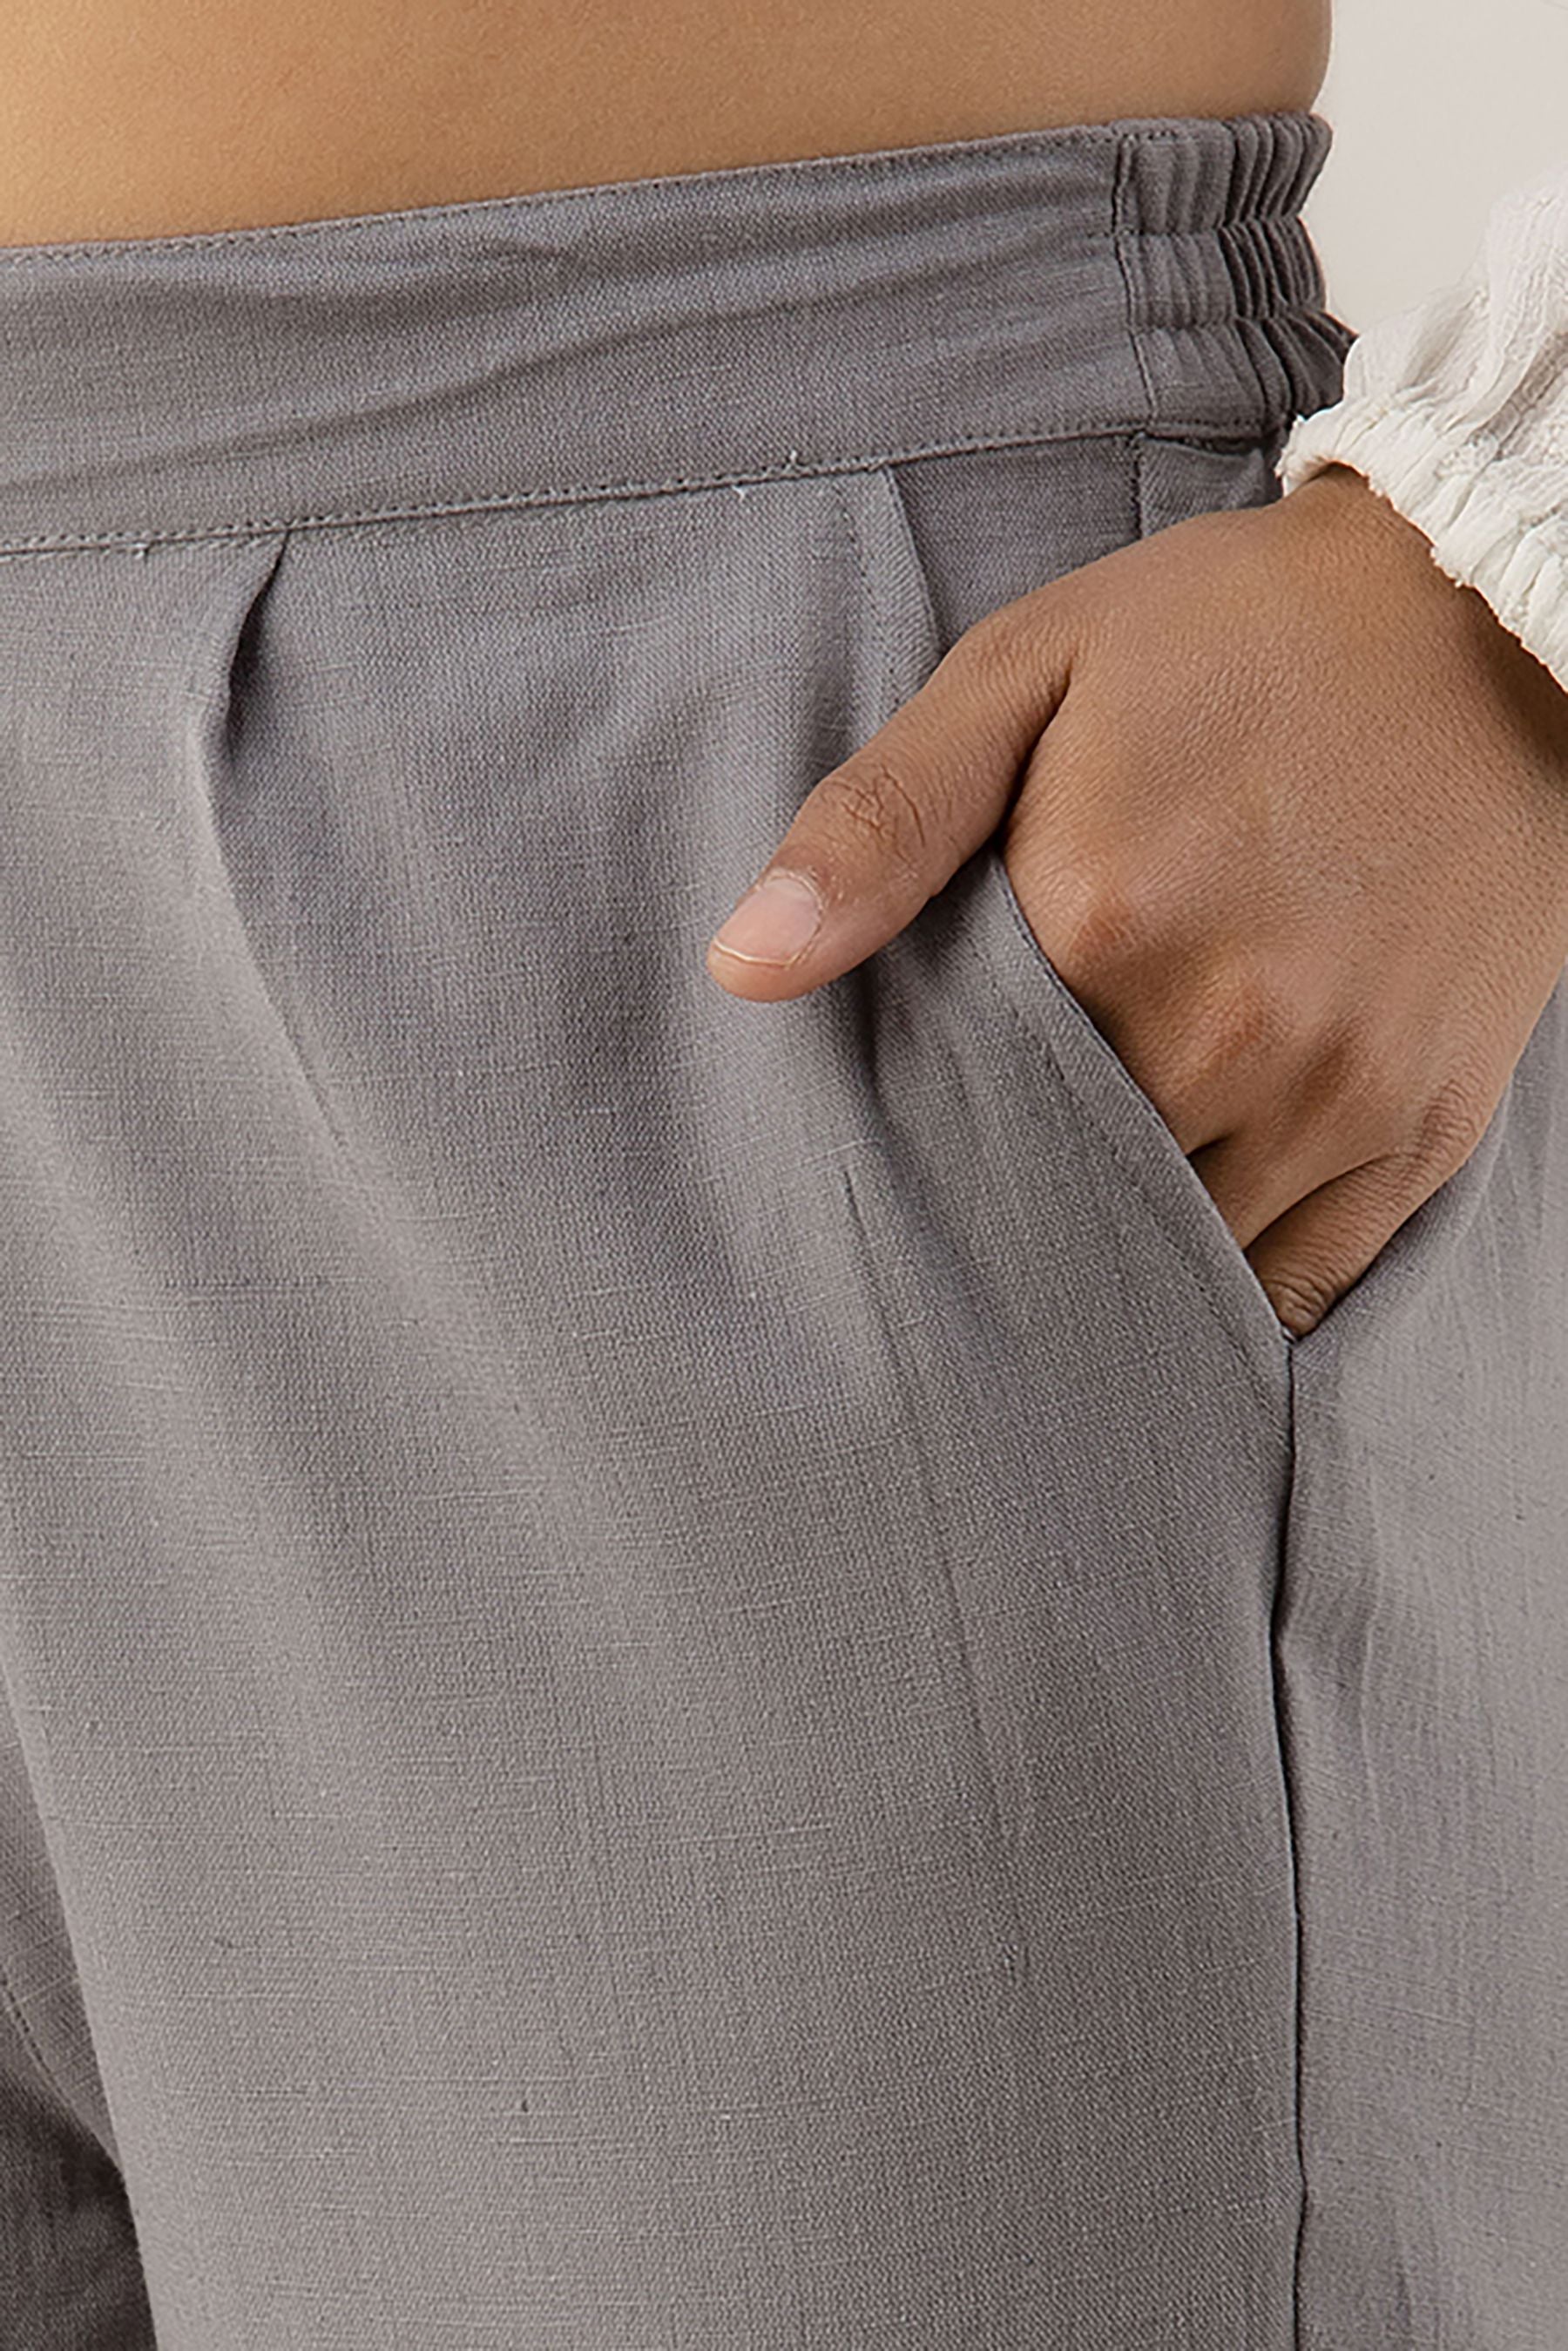 Men's Linen Pants HEMINGWAY. Buttoned Trousers Natural Grey Pants Linen  Mens Clothing Victorian Vintage Antique Classical French Work Pants - Etsy